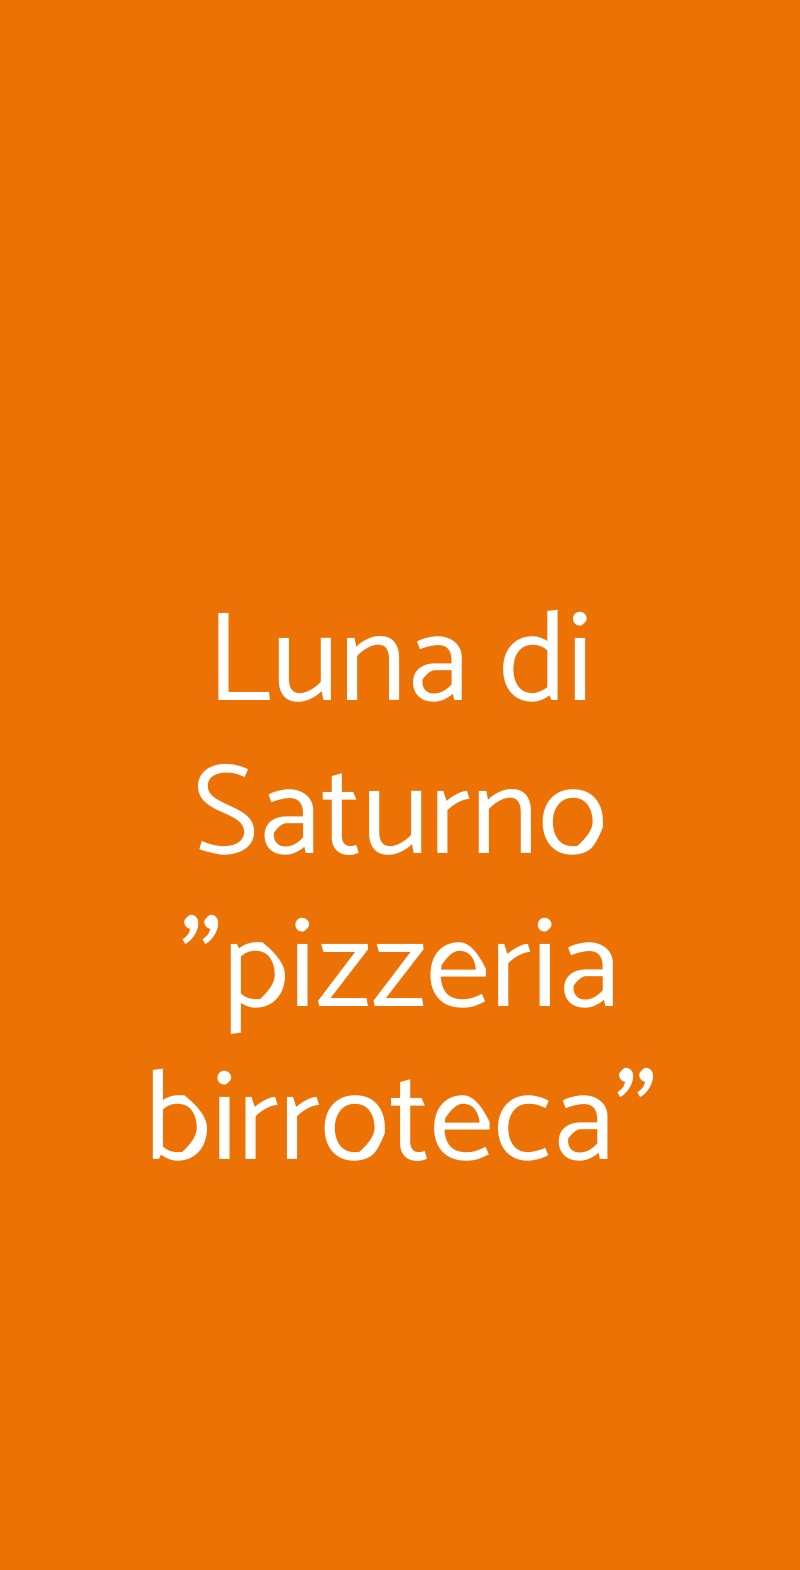 Luna di Saturno "pizzeria birroteca" Colle di Val d'Elsa menù 1 pagina